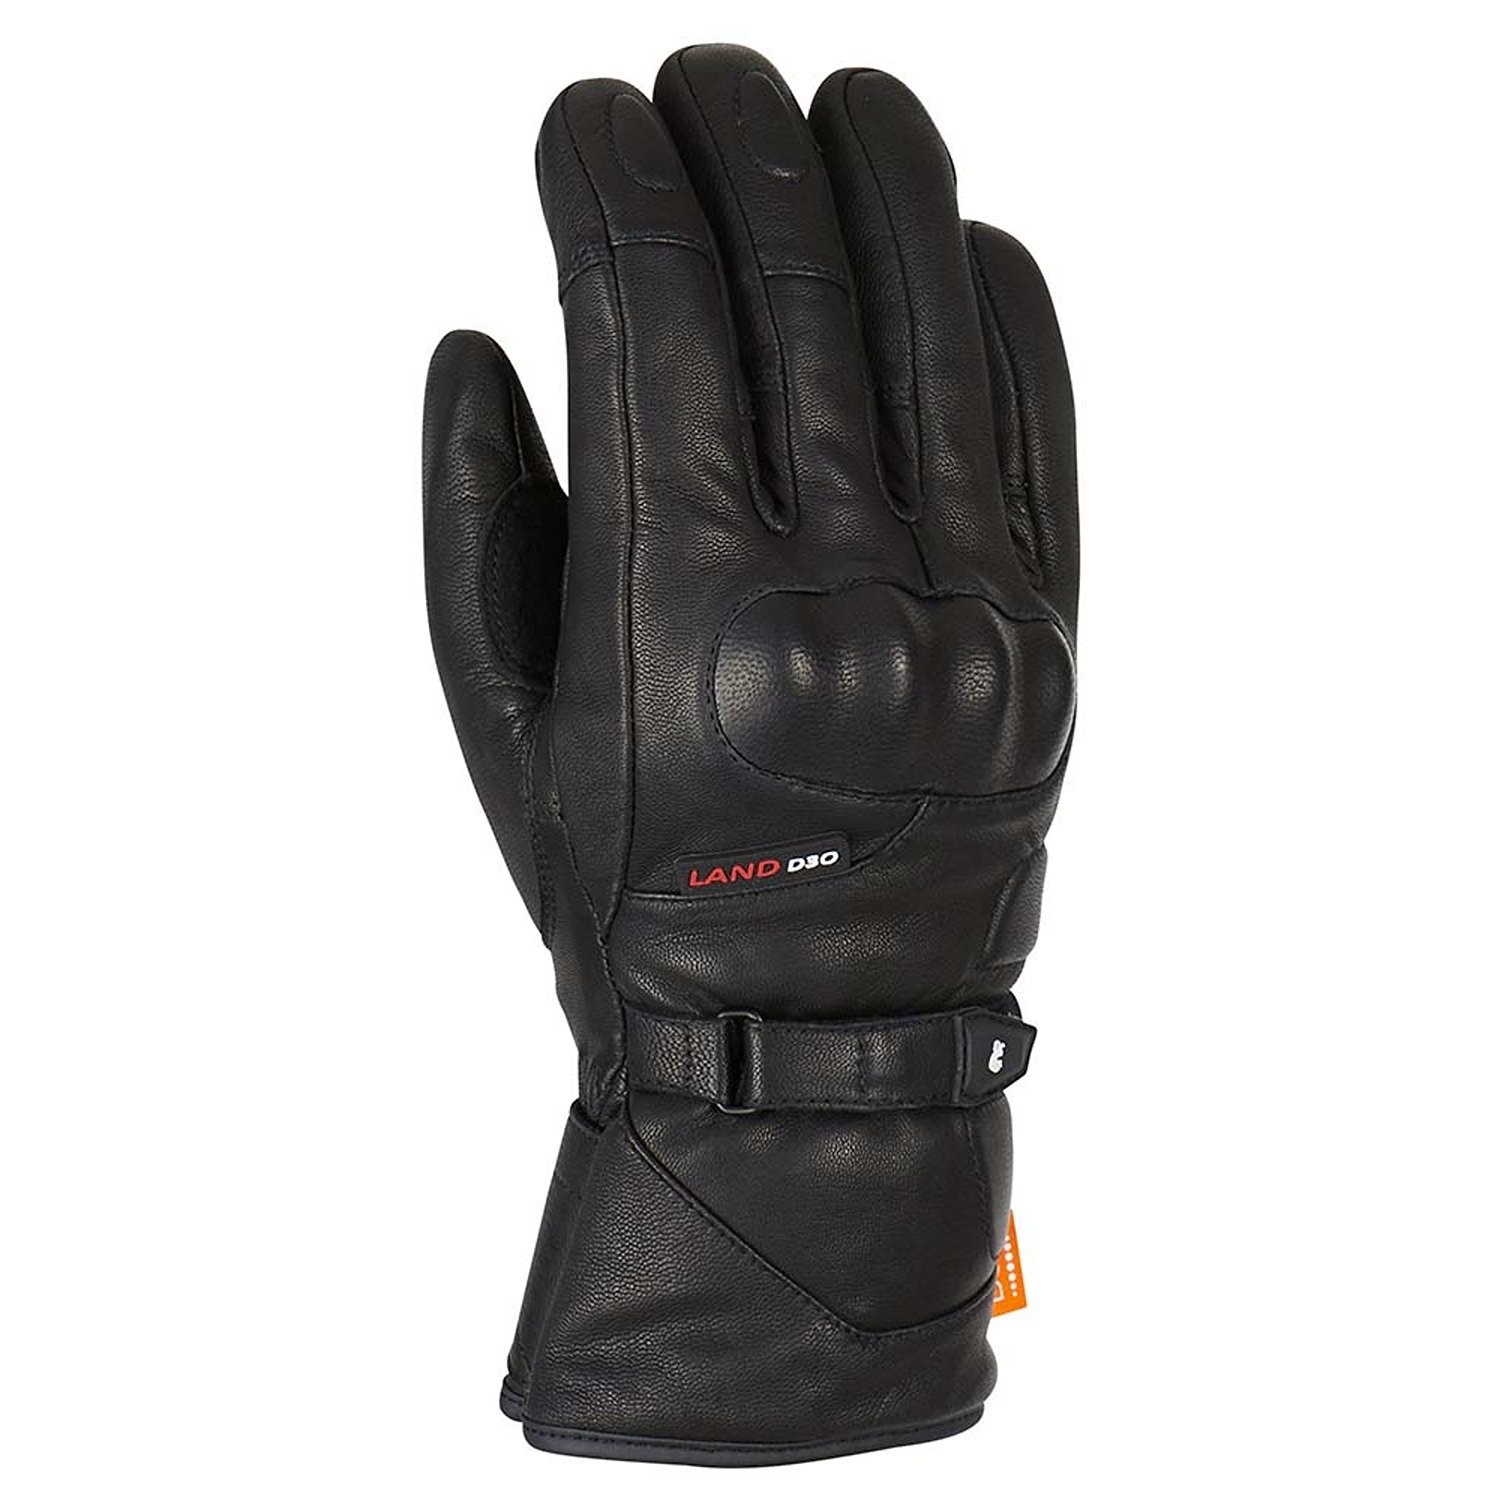 Image of Furygan Land DK D30 Gloves Black Size 2XL ID 3435980358587